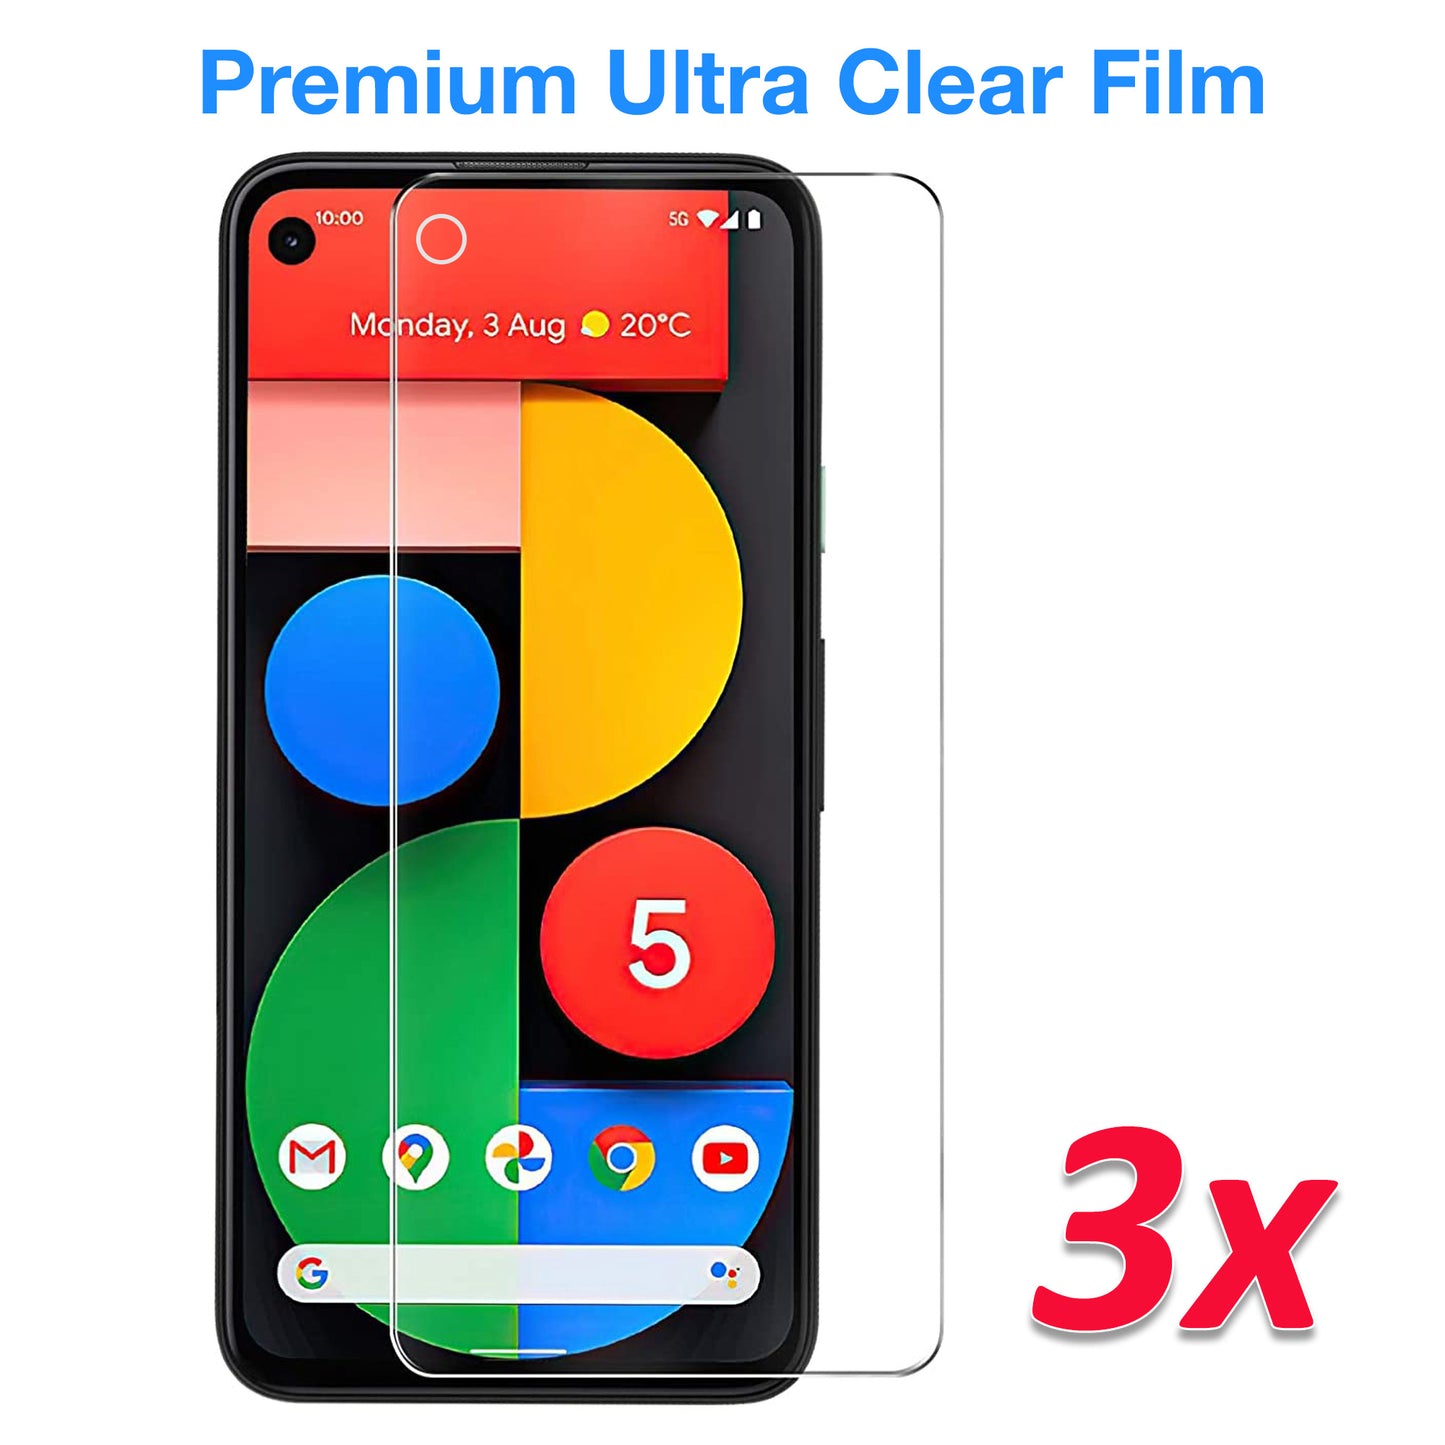 [3 Pack] MEZON Google Pixel 5 (6.0") Ultra Clear Screen Protector Case Friendly Film (Pixel 5, Clear)